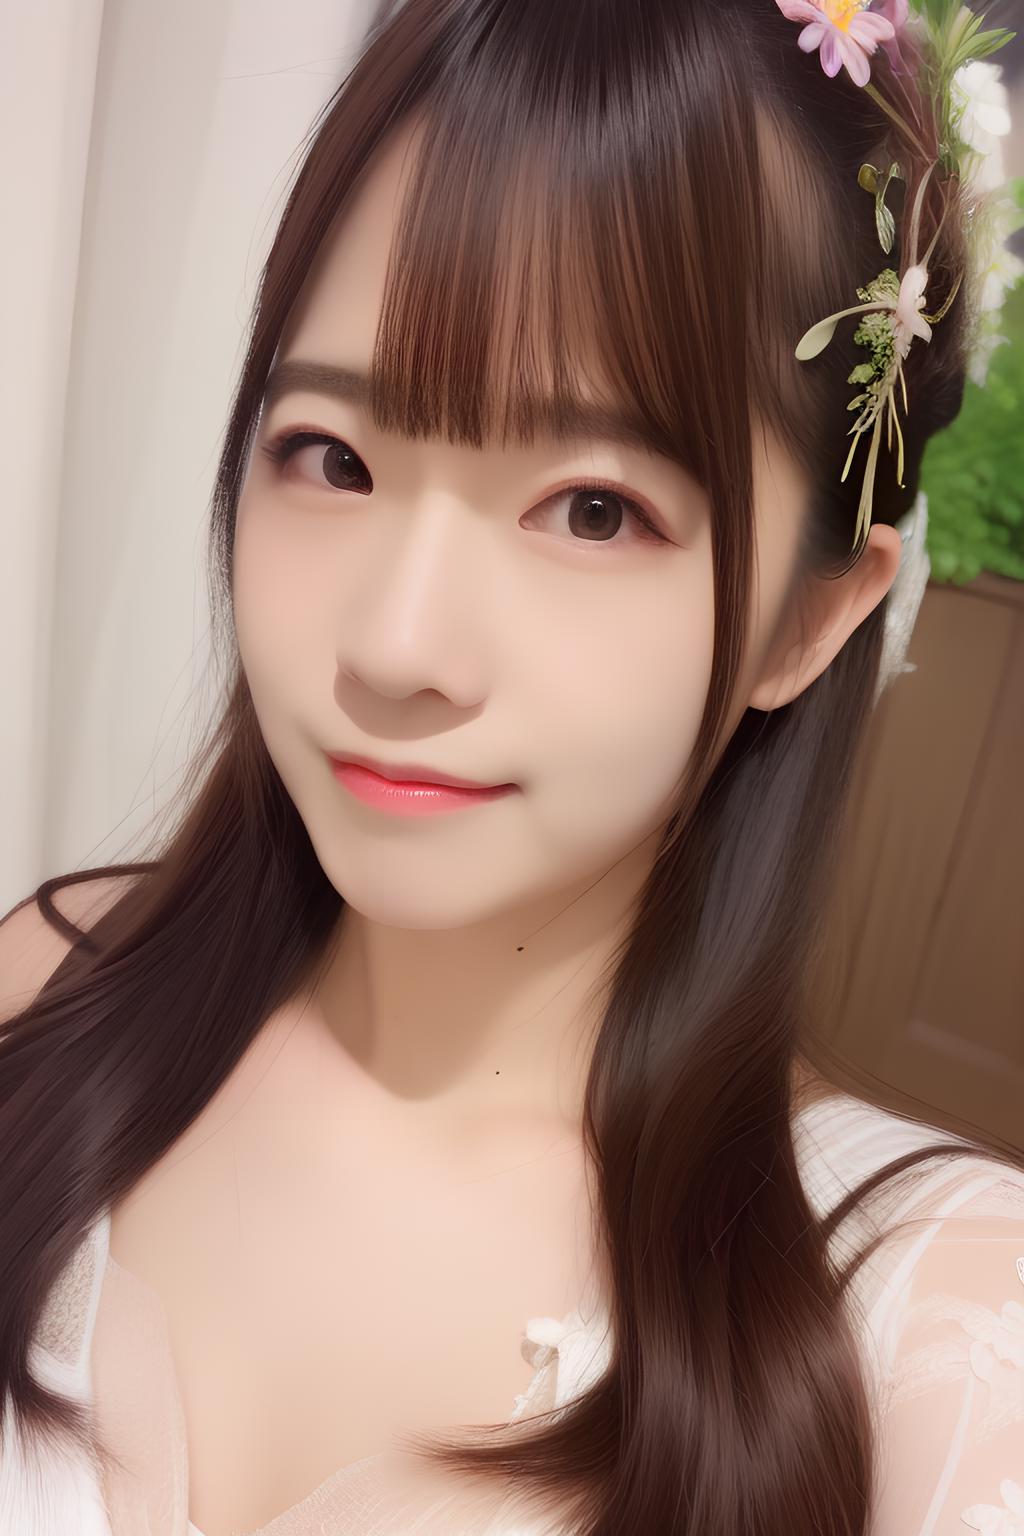 林忆宁，塞纳河小偶像 (010, idol girl from SNH48) image by CrispyShark773